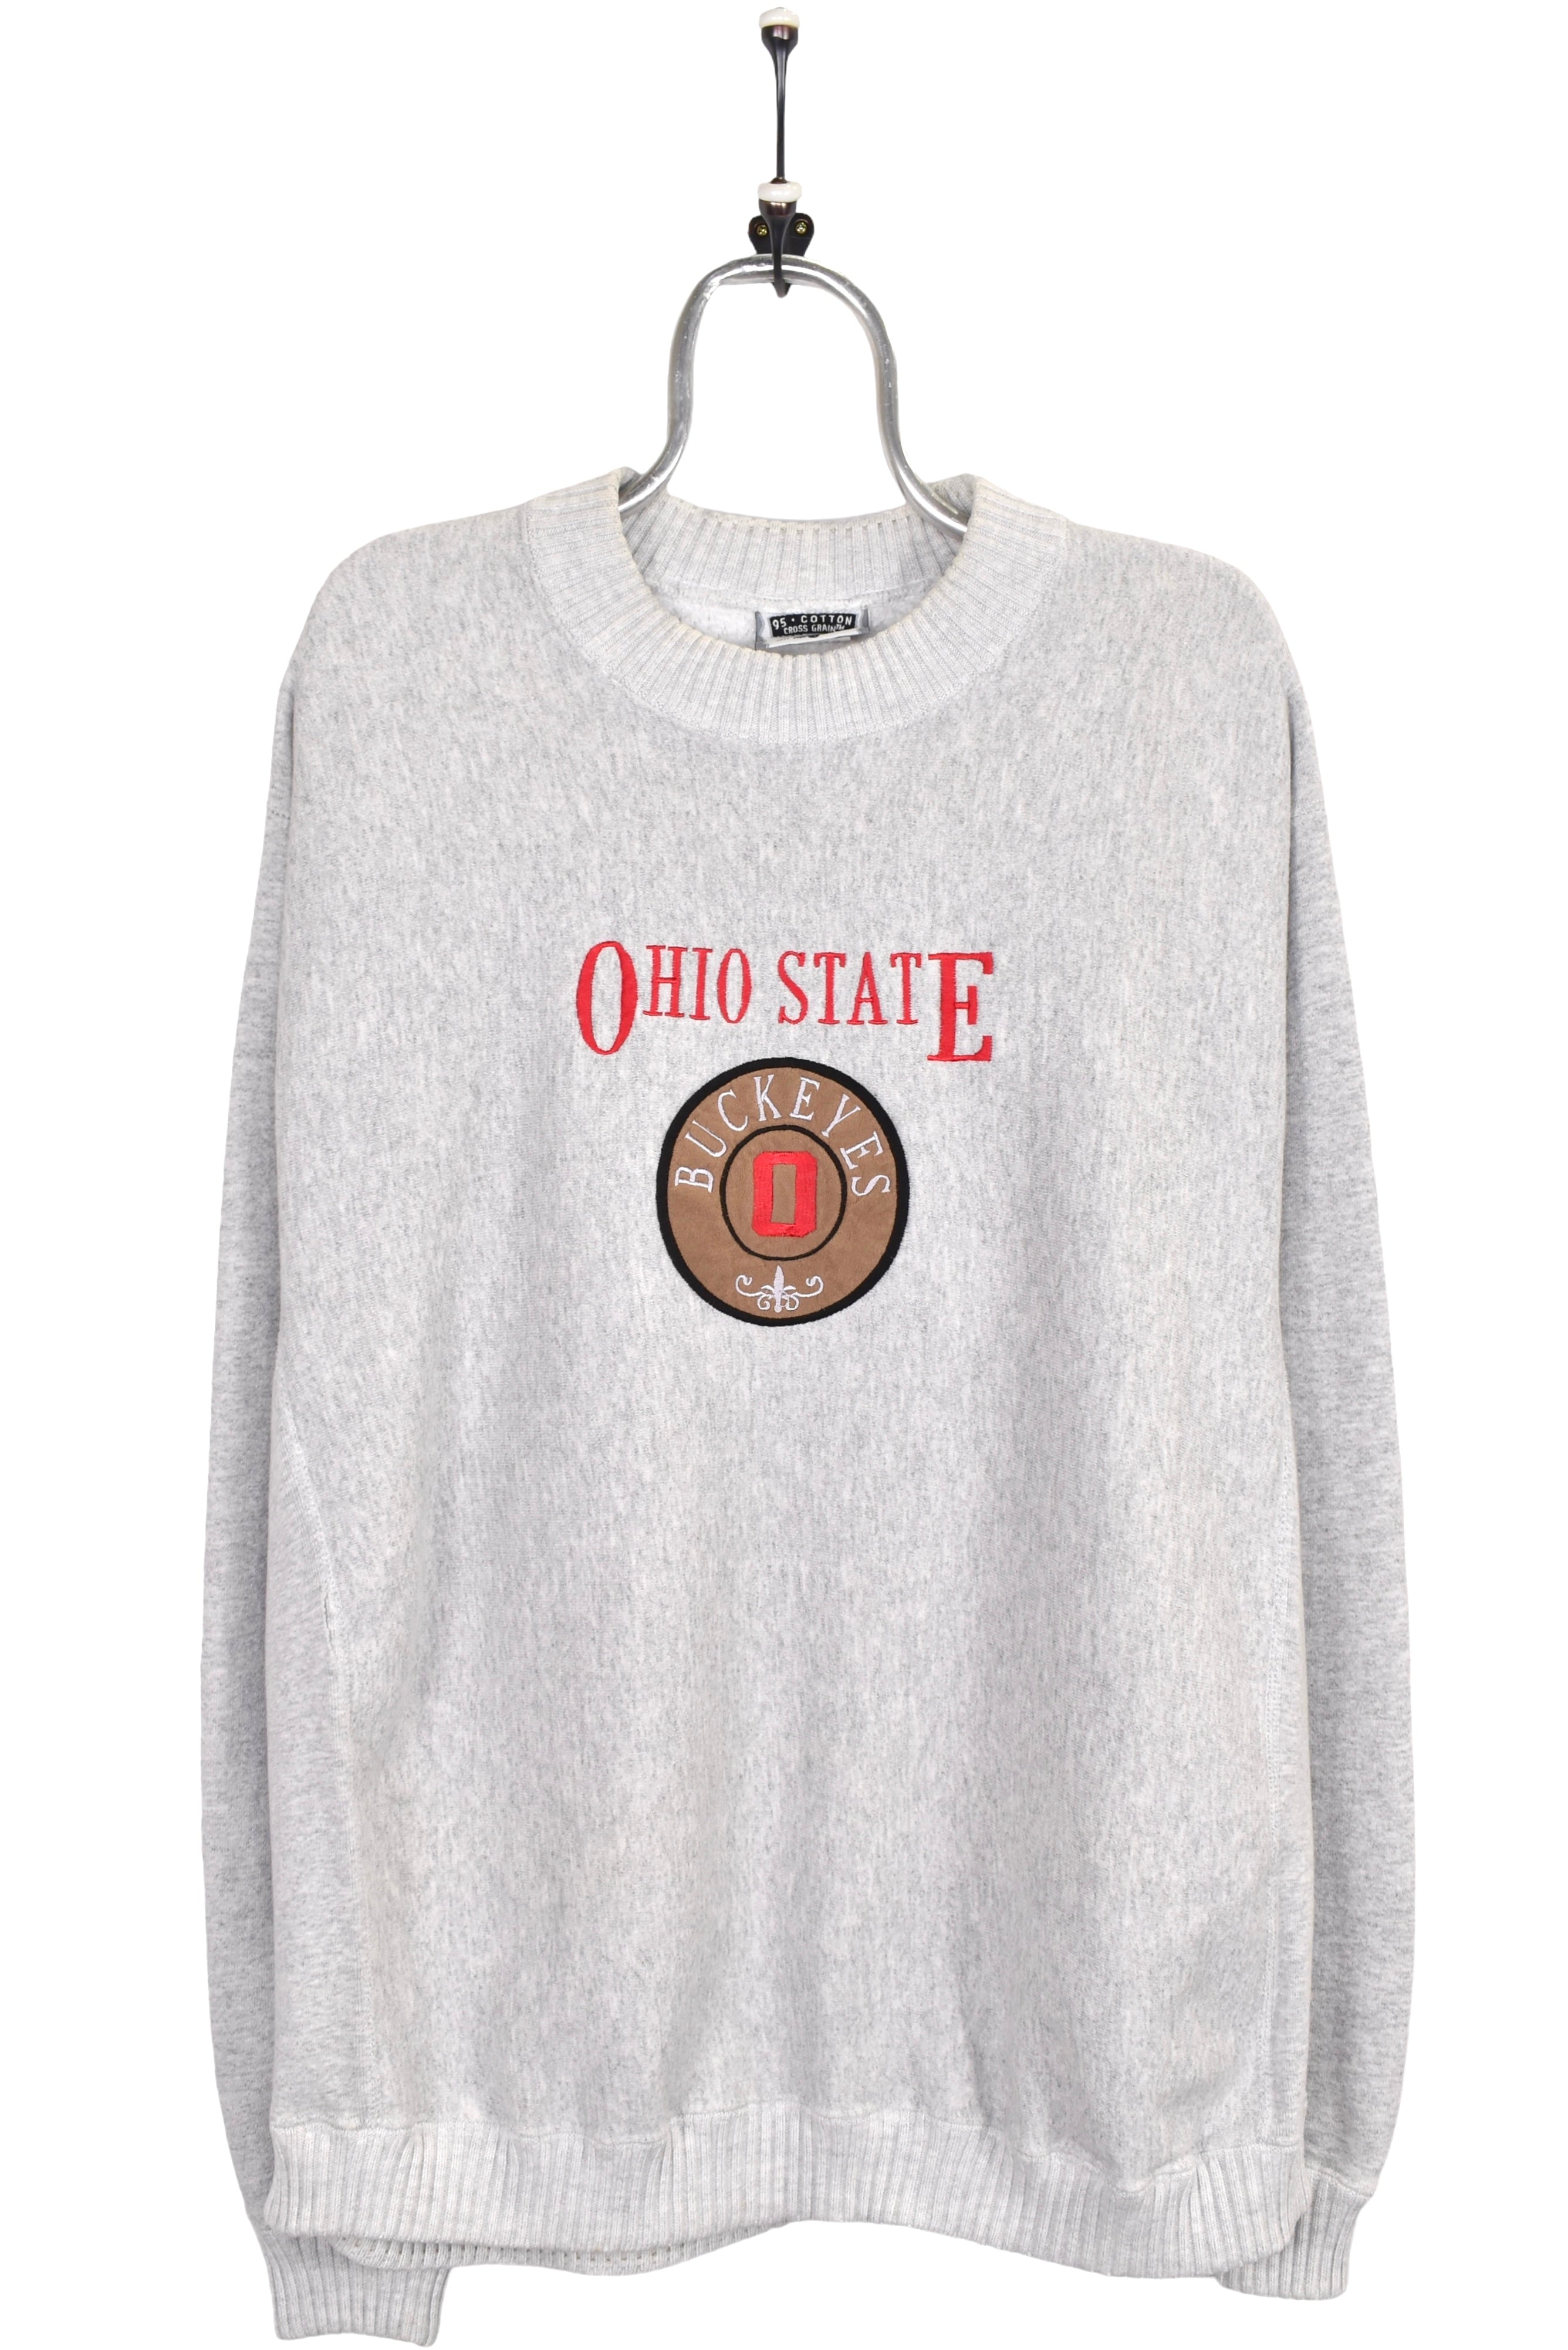 Vintage Ohio State University sweatshirt, grey embroidered crewneck - XL